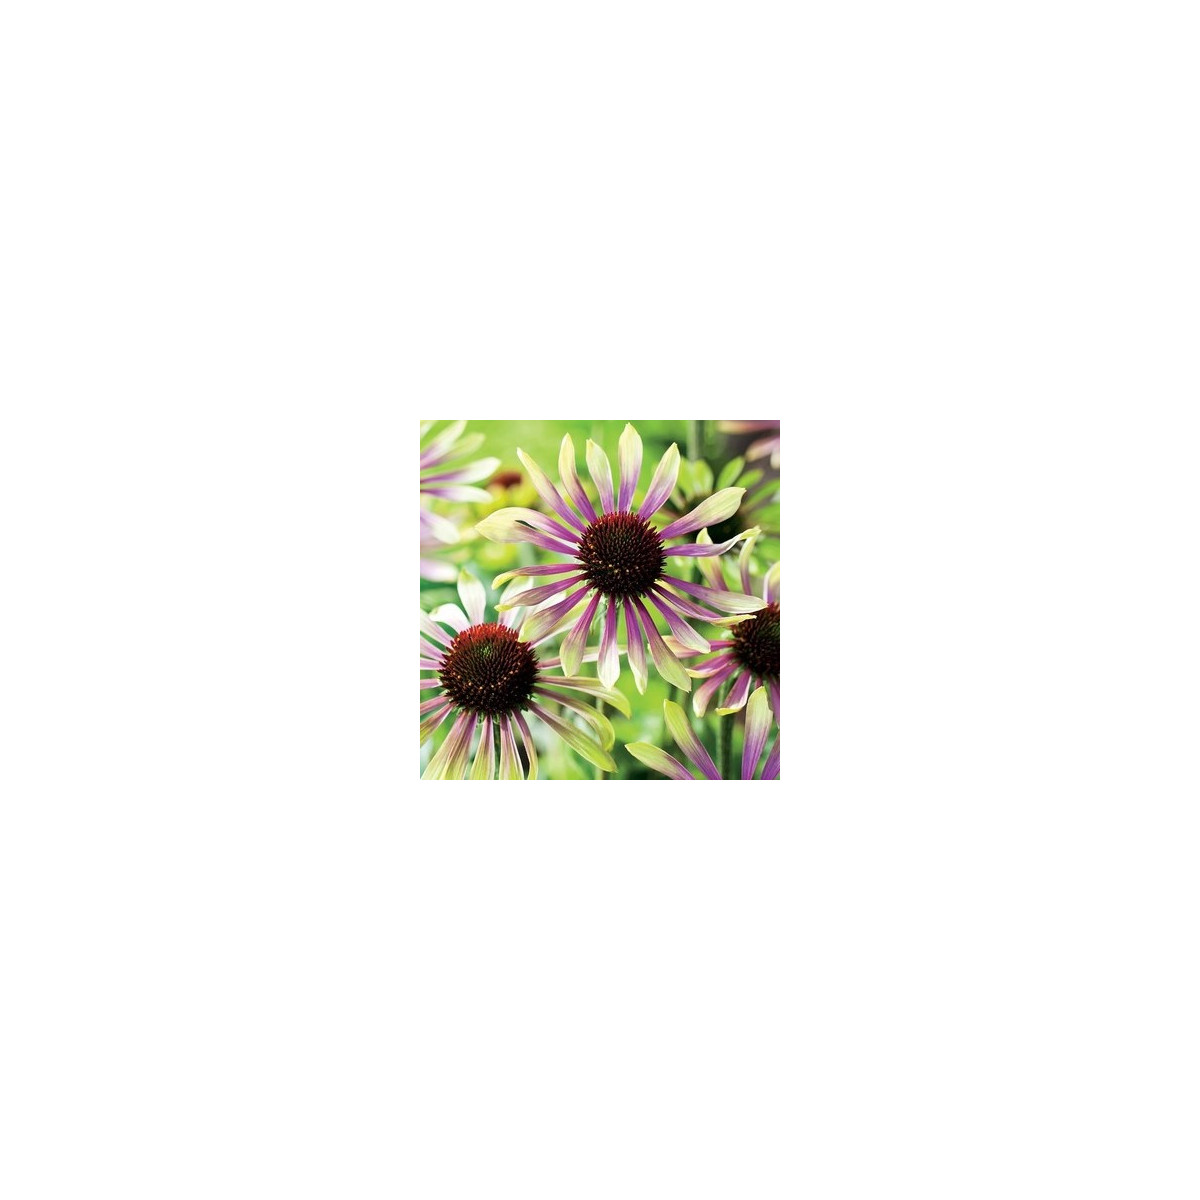 Třapatkovka Green Twister - Echinacea purpurea - prostokořenná sazenice třapatkovky - 1 ks